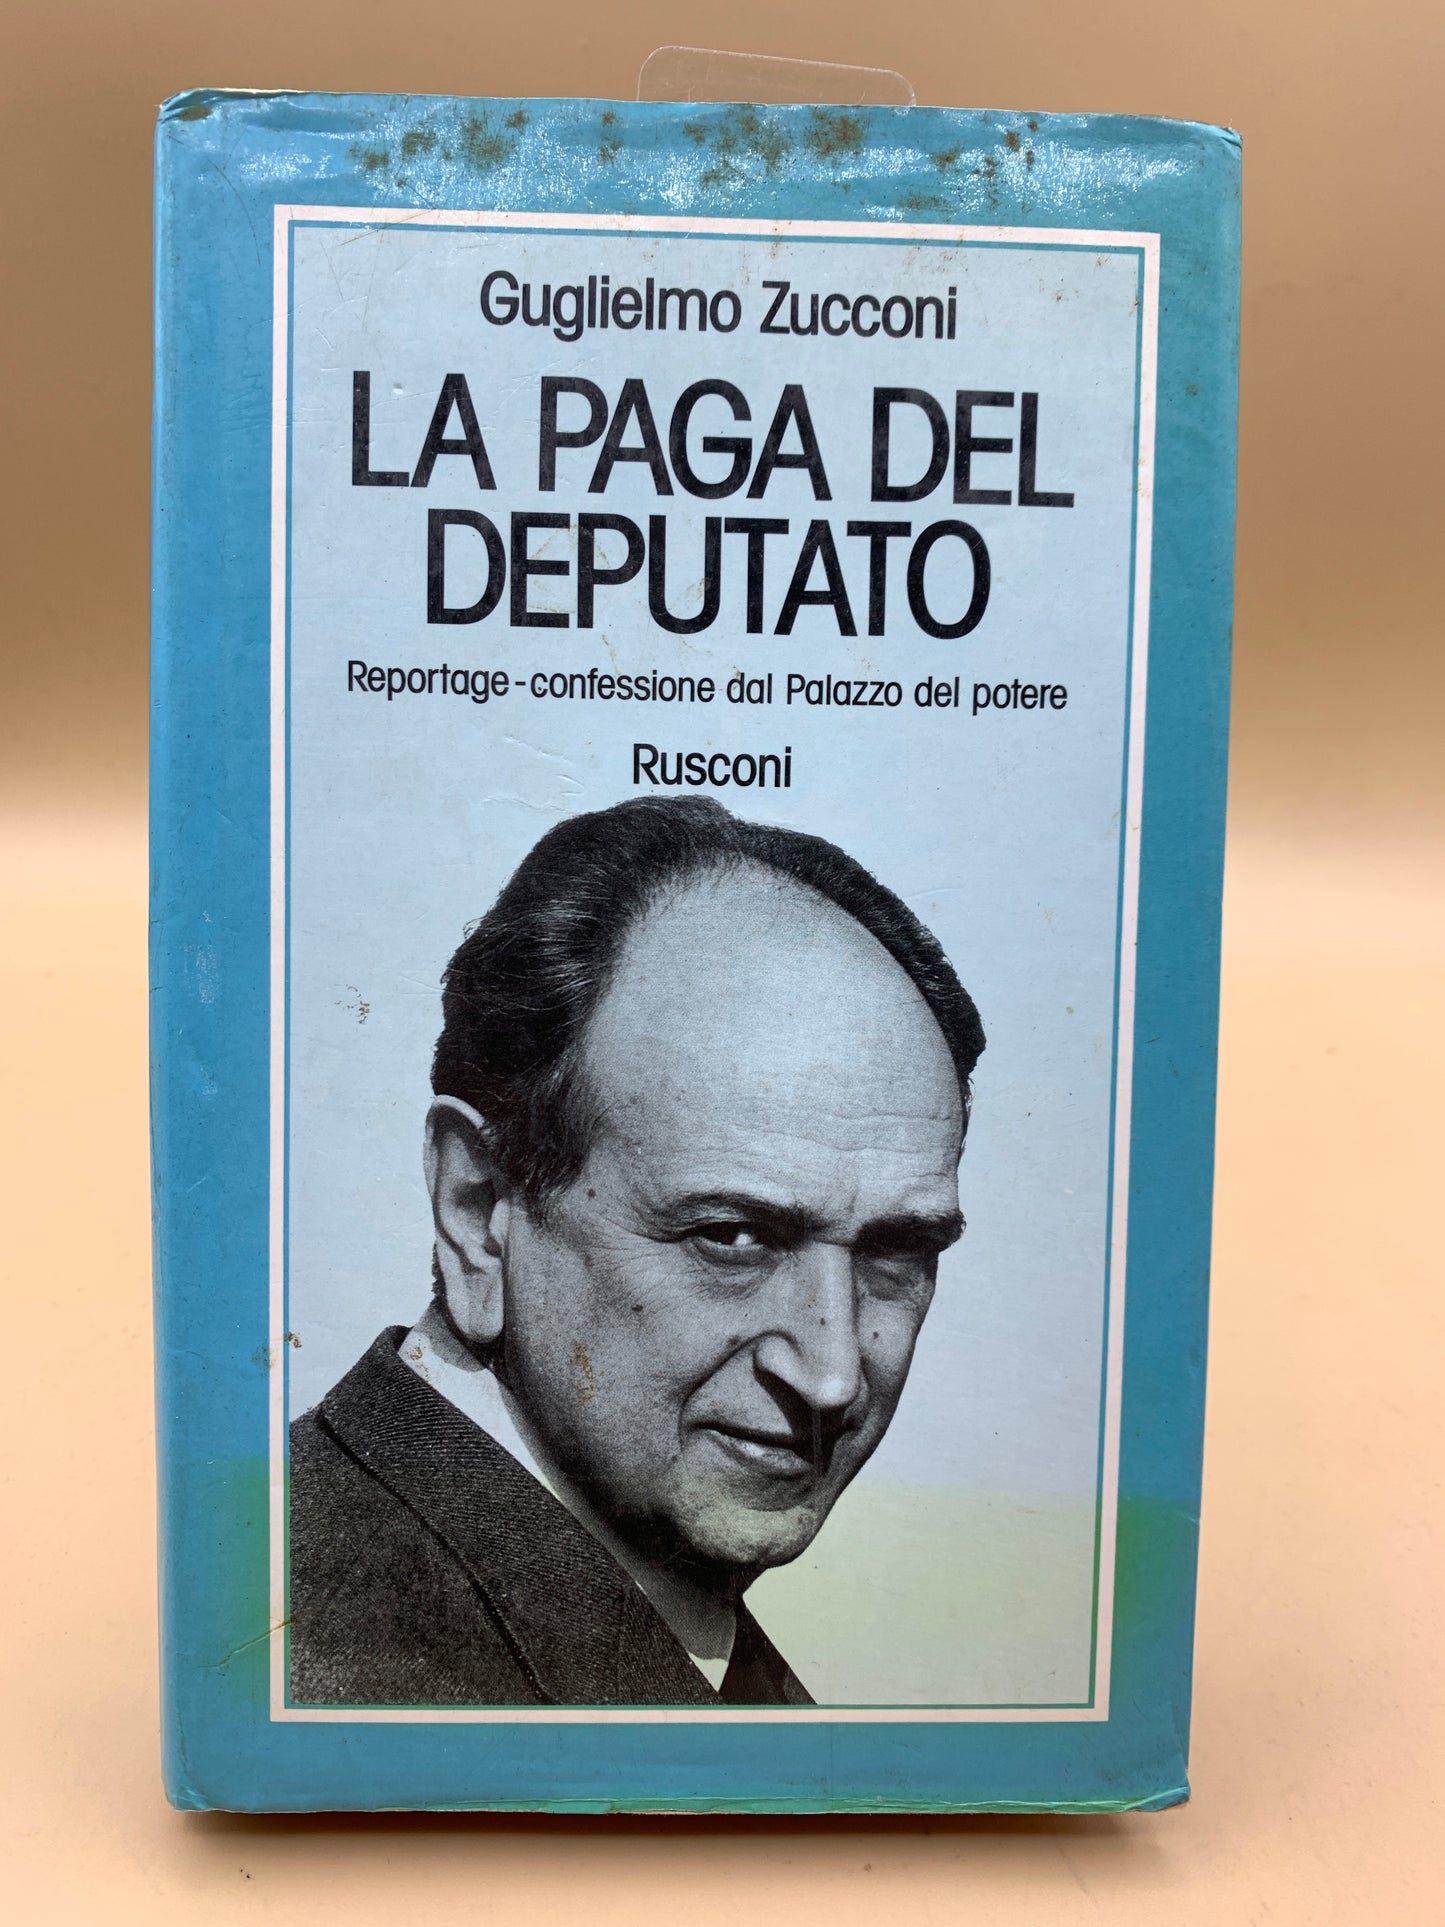 The MP's pay - Giovanni Zucconi